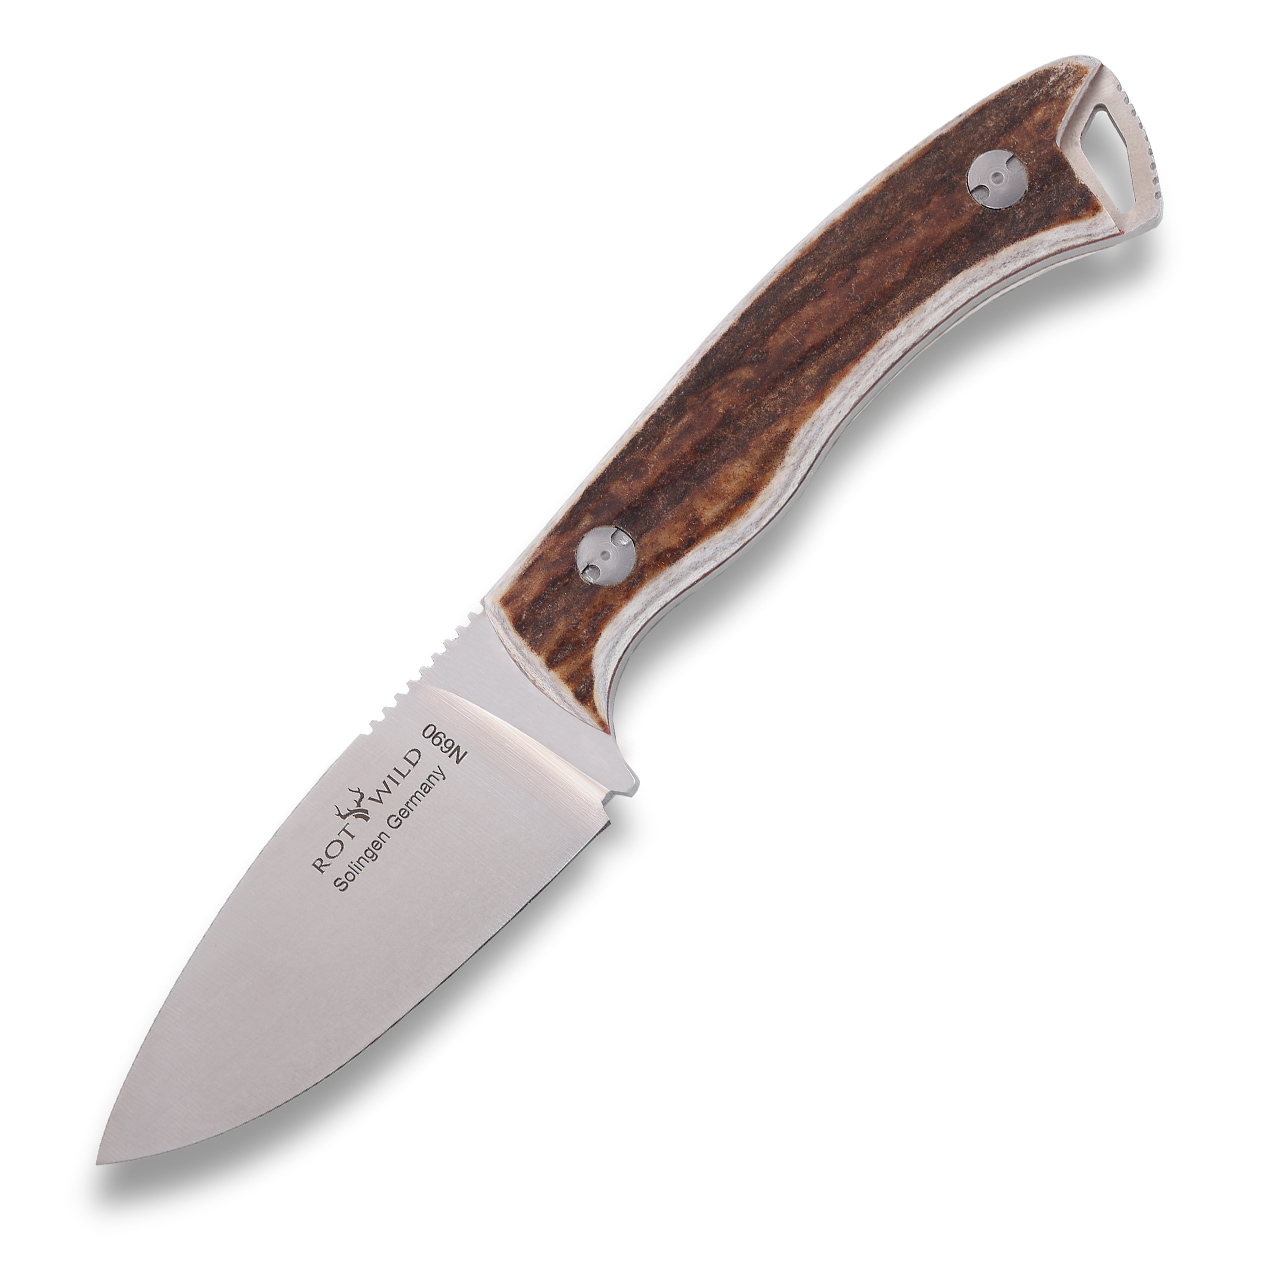 Hunting knife "Milan" buckhorn